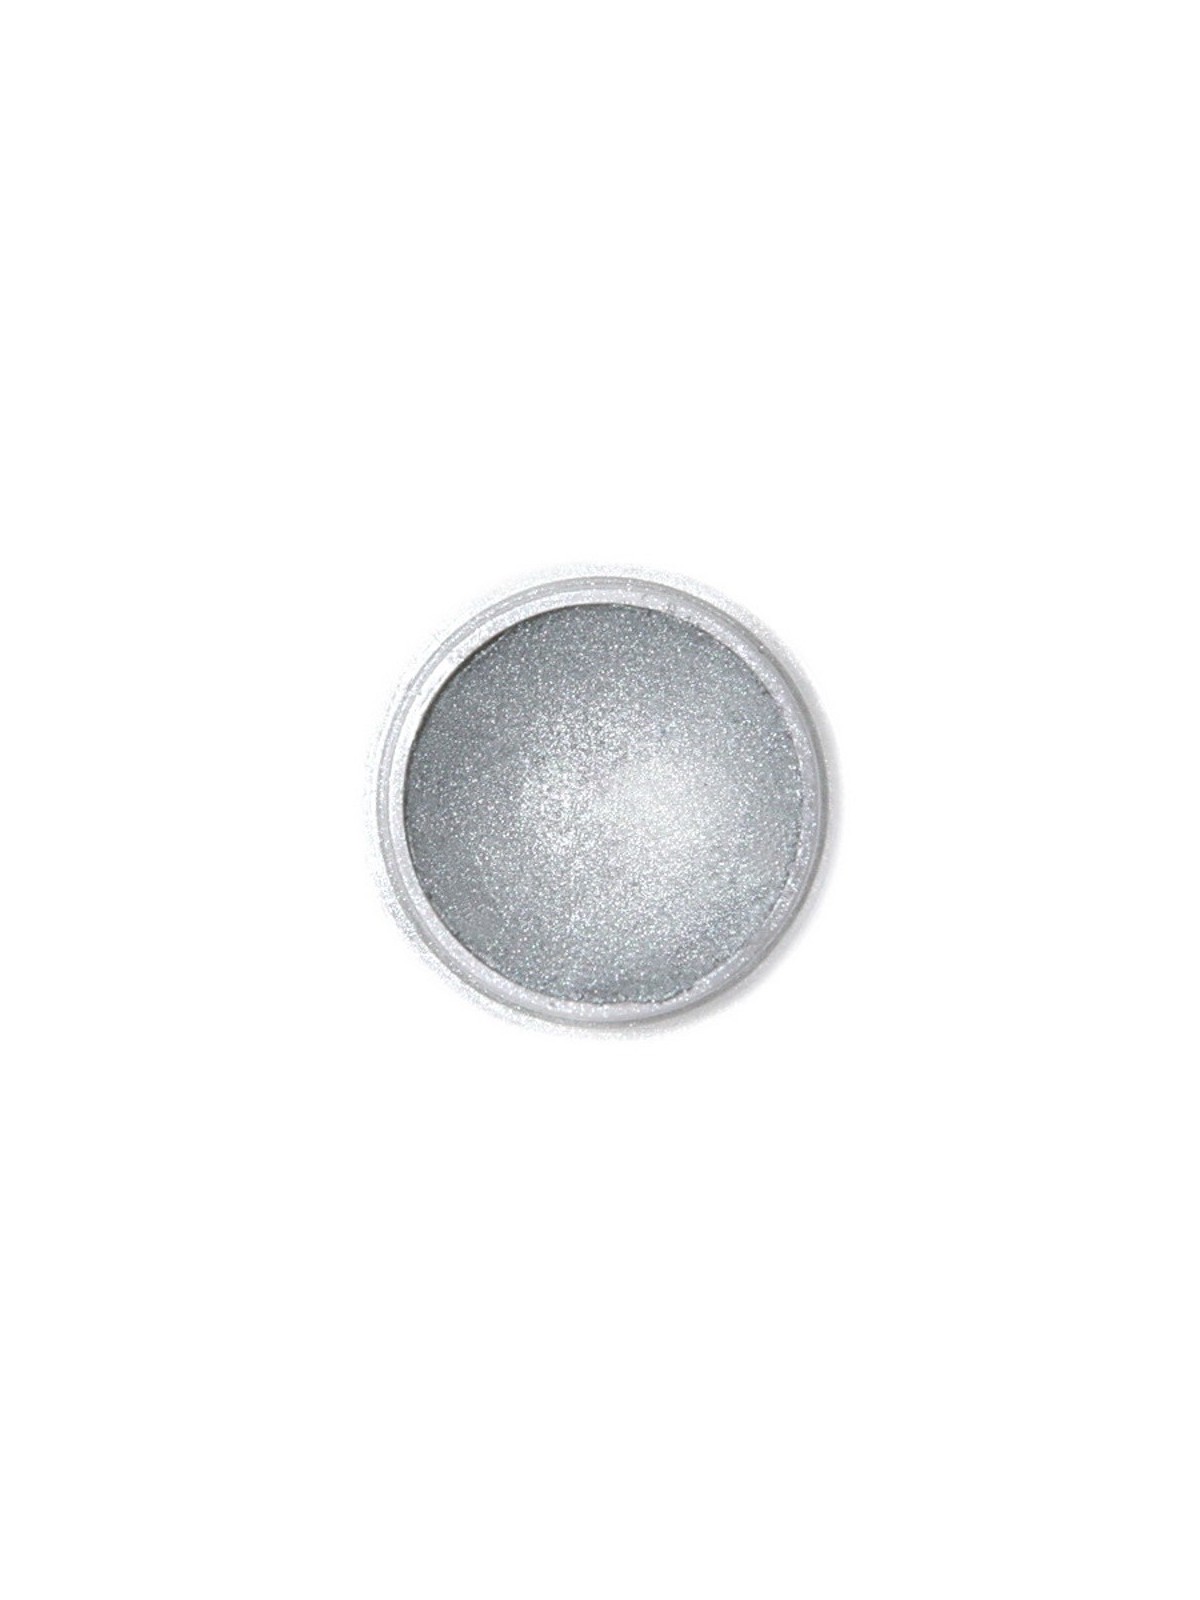 Dekoratívna prachová perleťová farba Fractal - Dark Silver, Sötét metál ezüst (2,5 g)